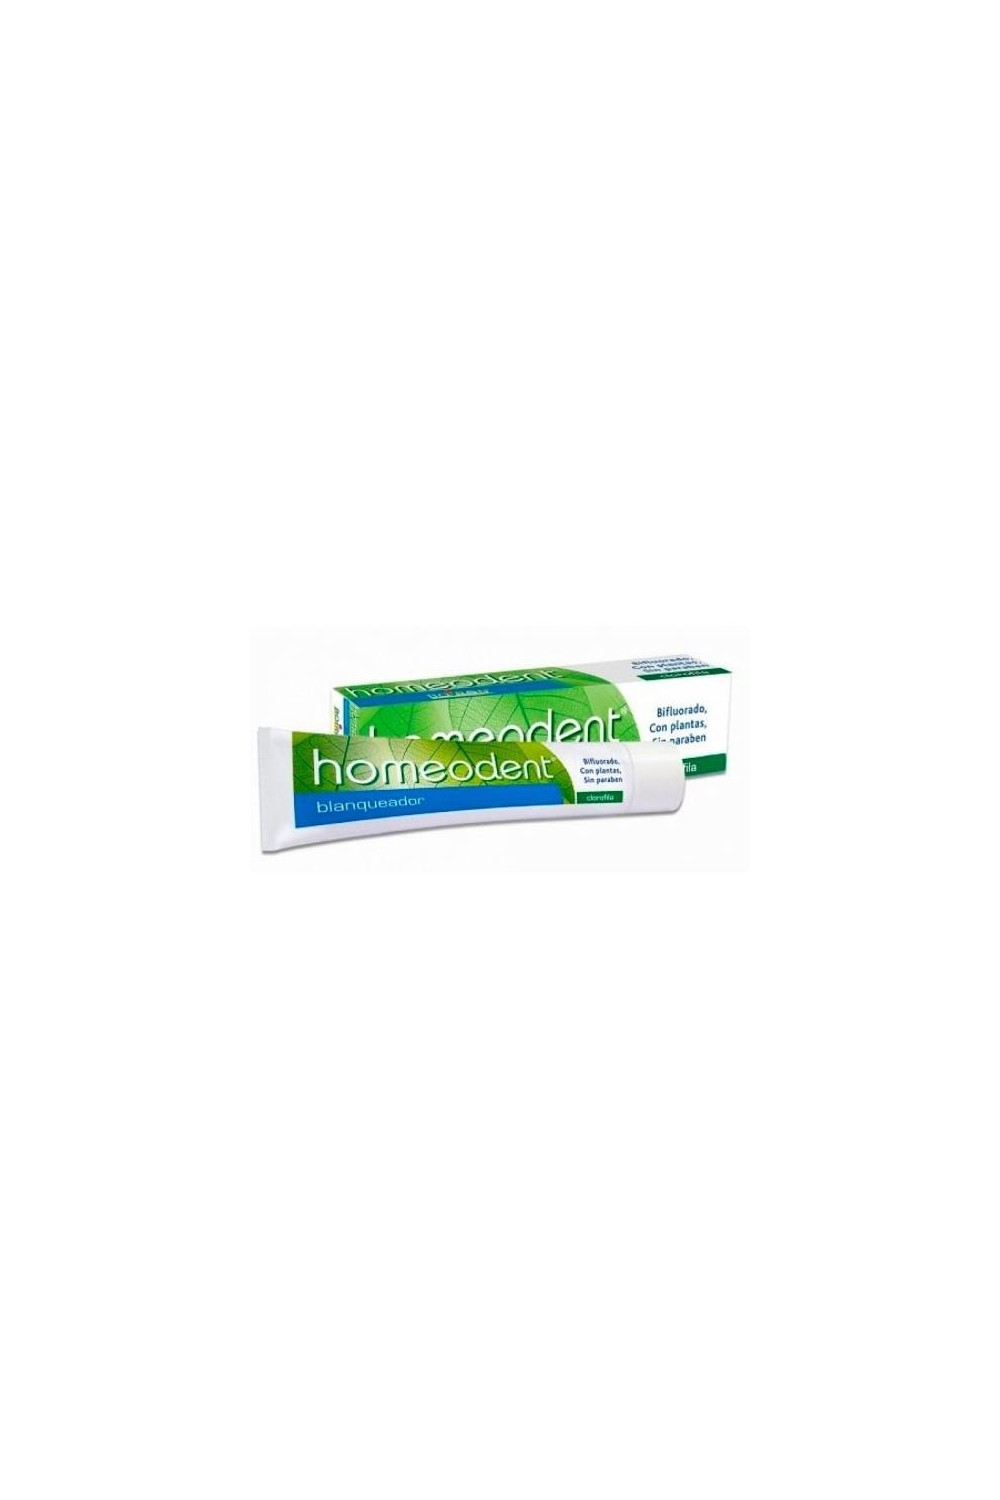 Boiron Homeodent Chlorophyll Whitening Toothpaste 75ml